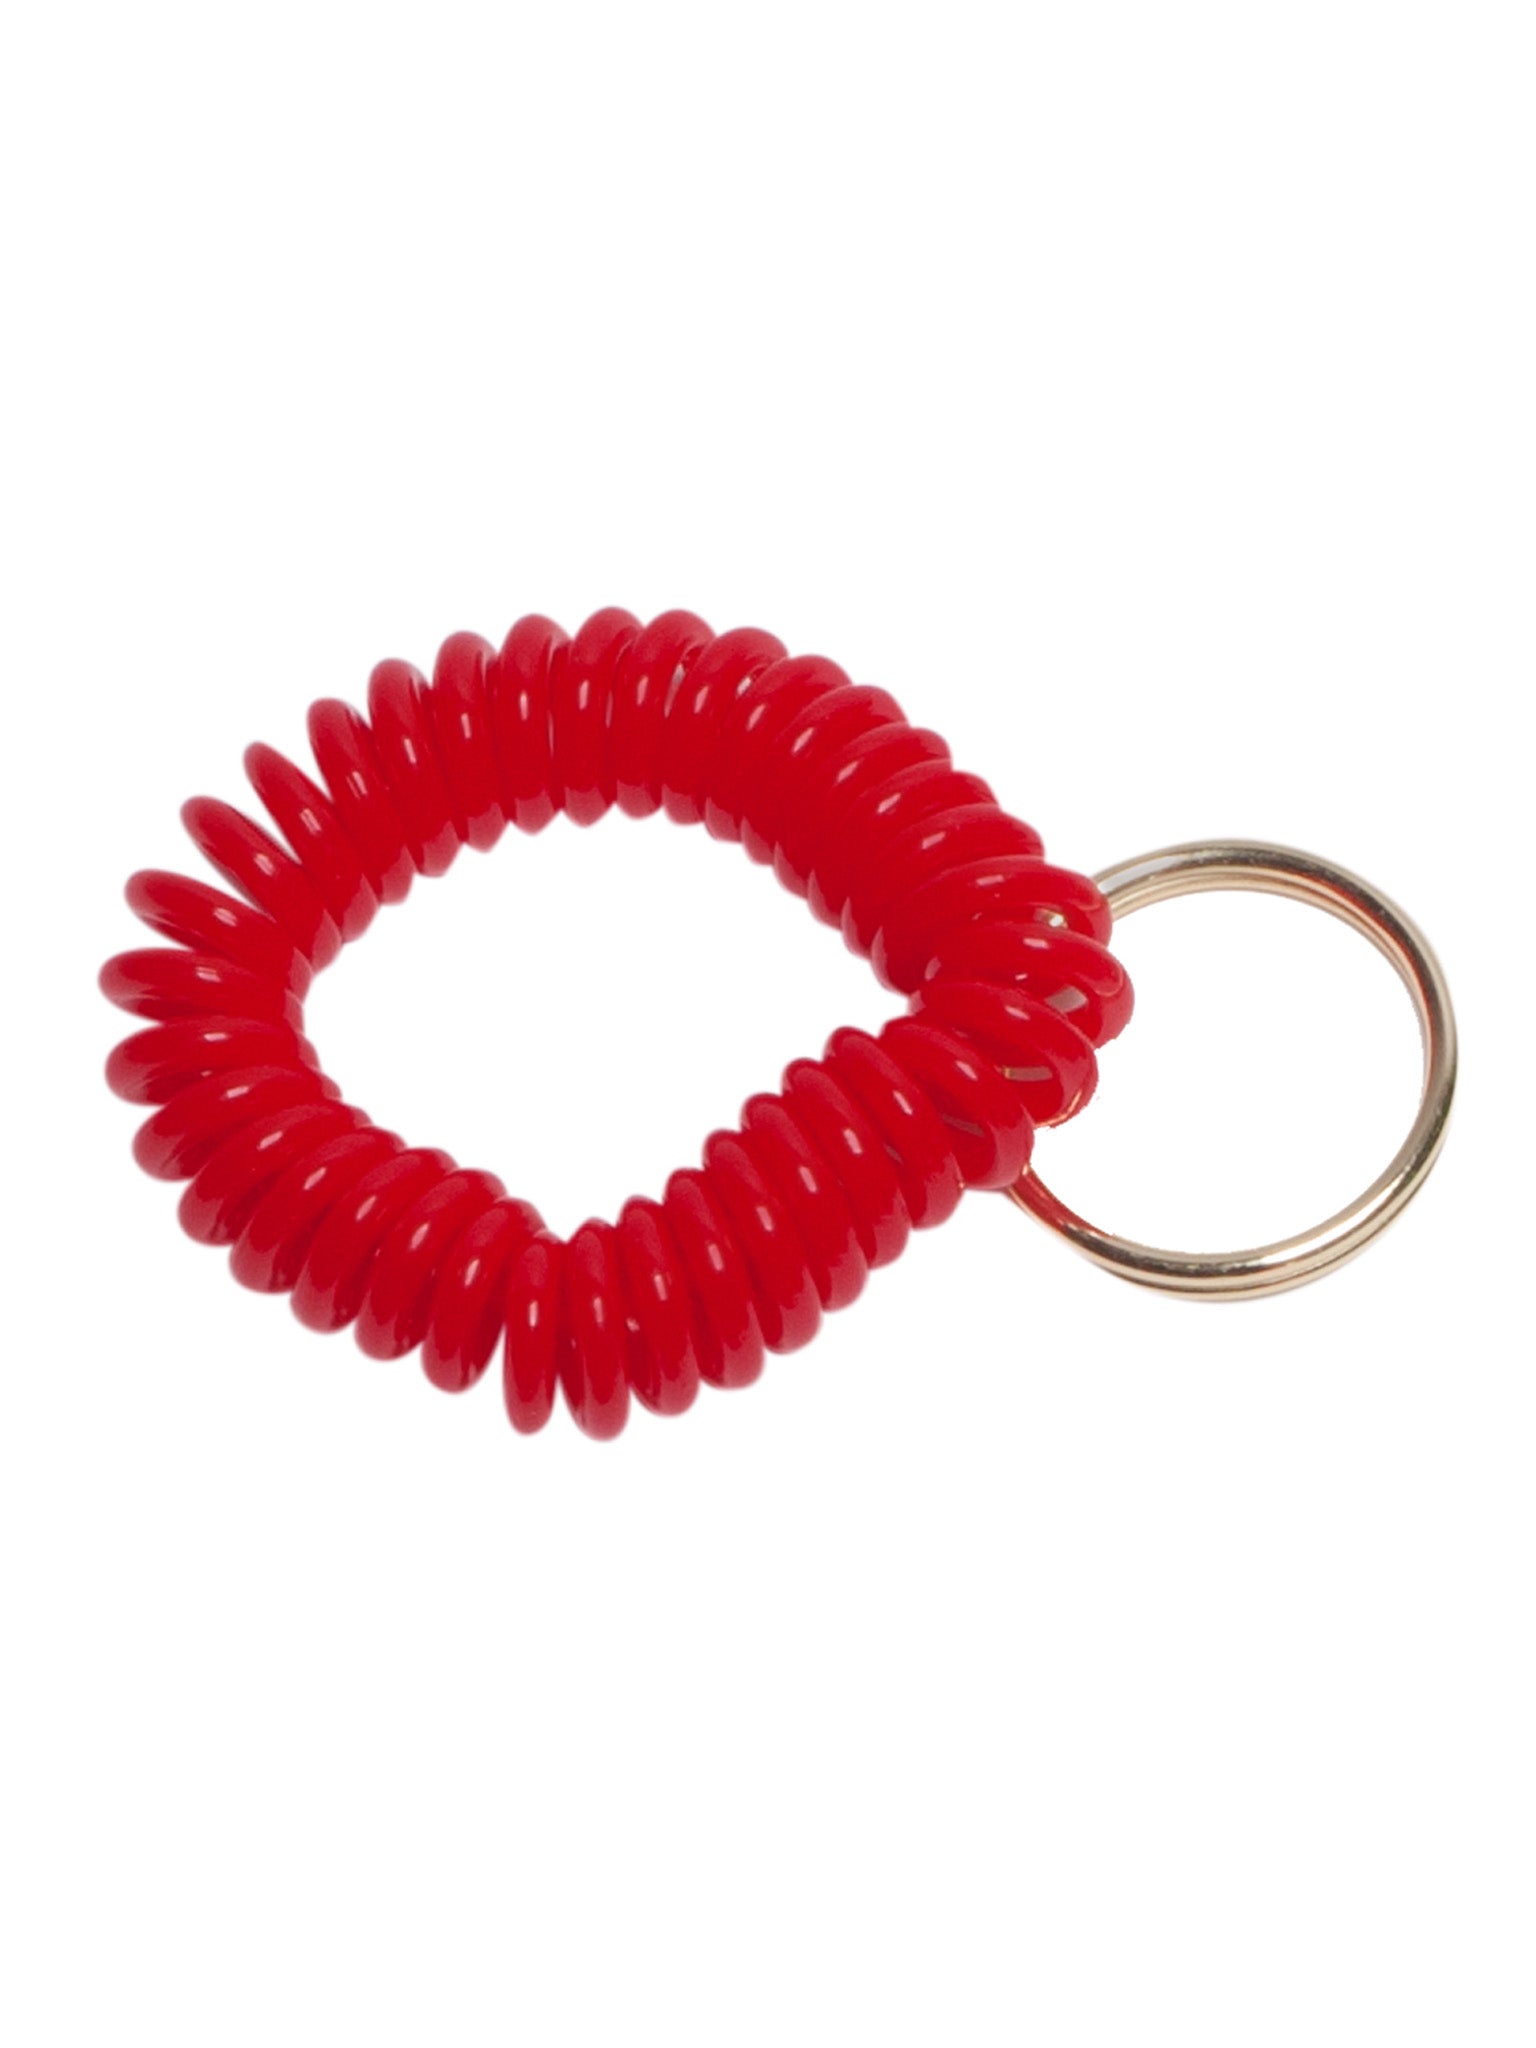 Spiral Bracelets For Whistle - Red